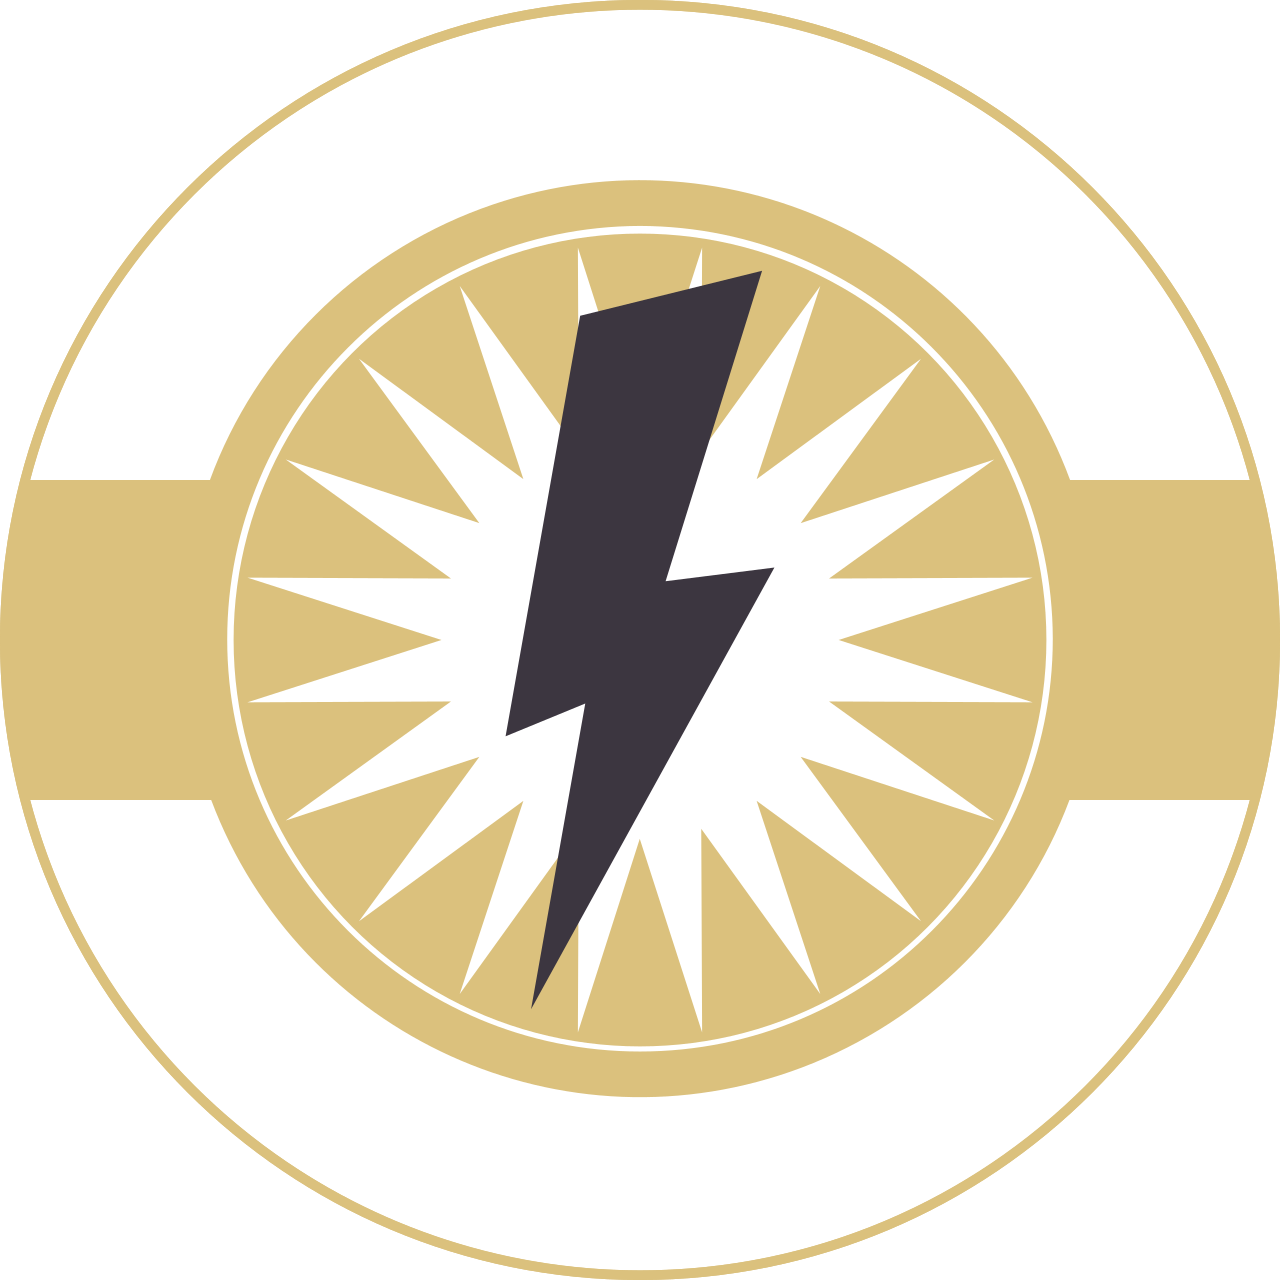 Electric Dames's web page